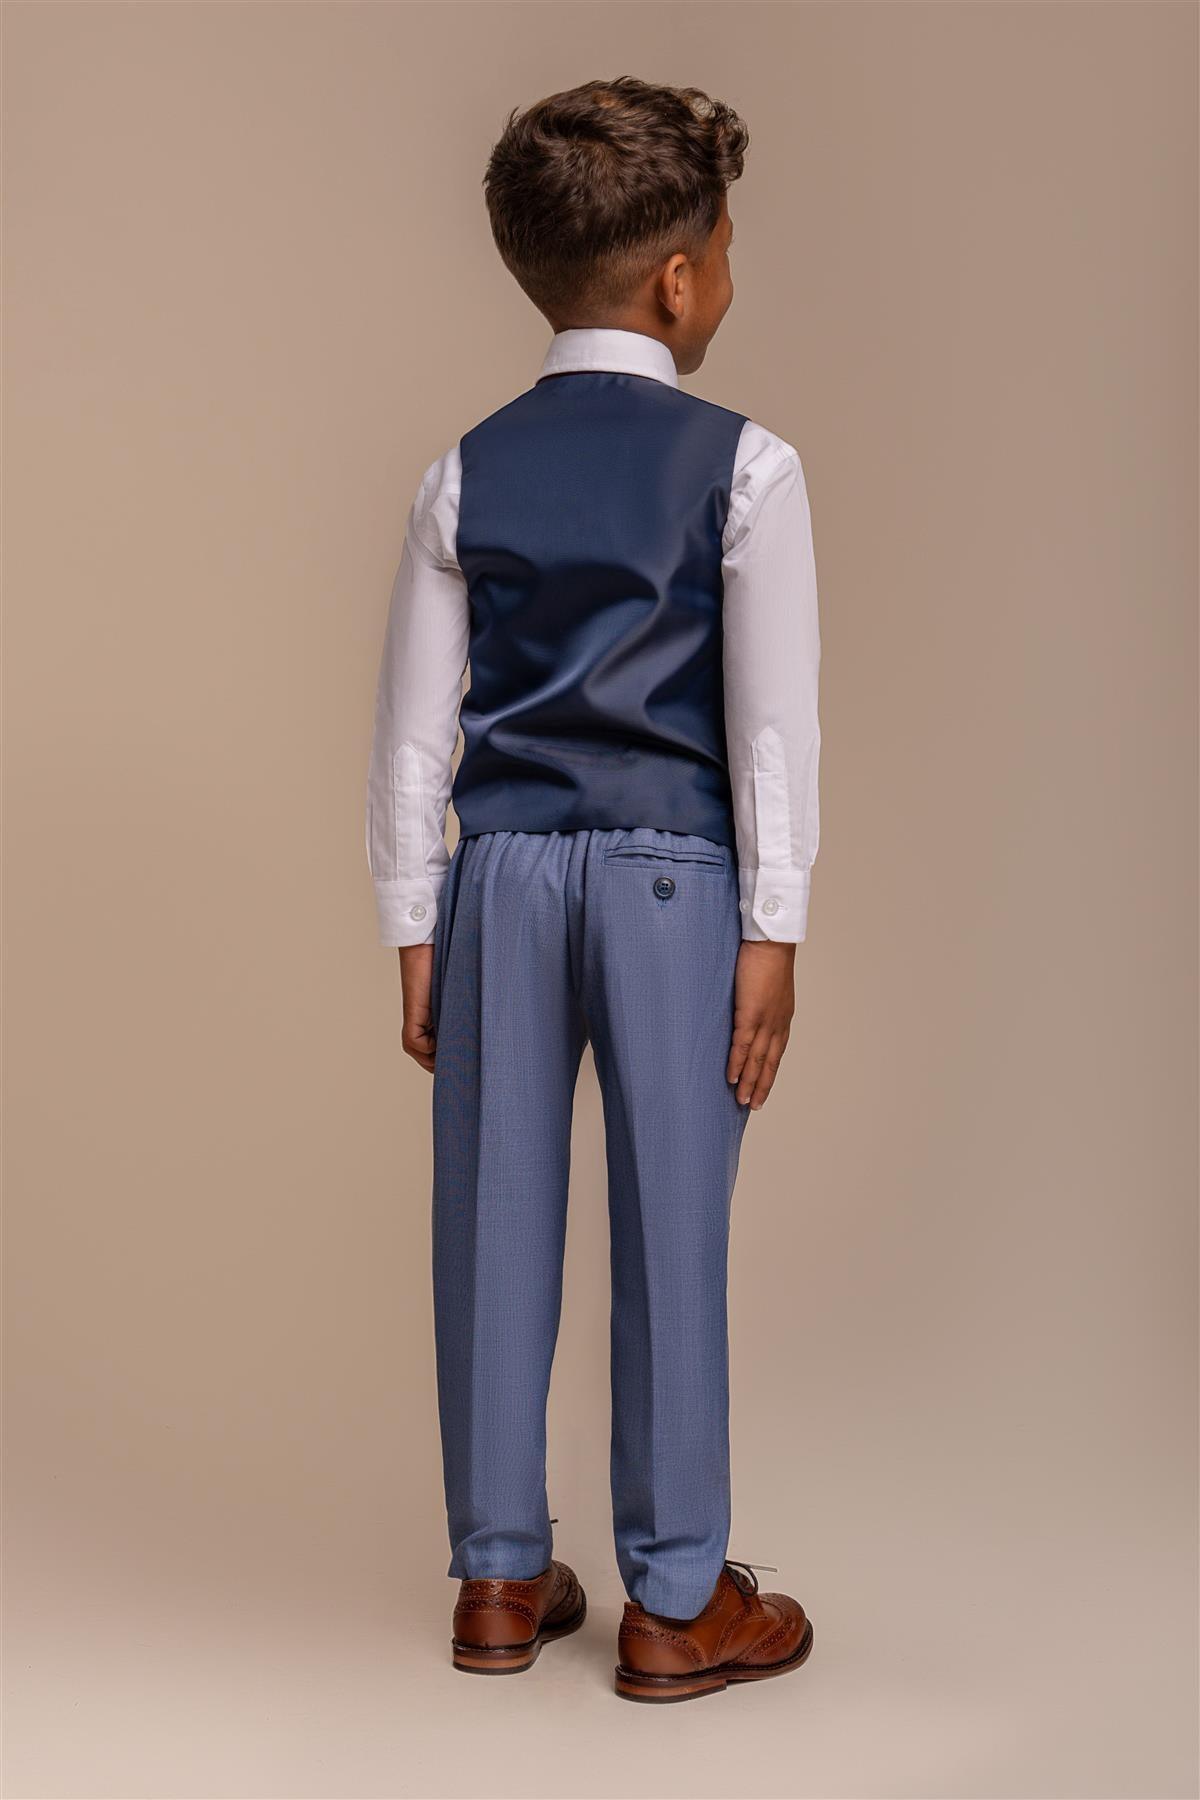 Blue Jay Boys Suit Three Piece Suit